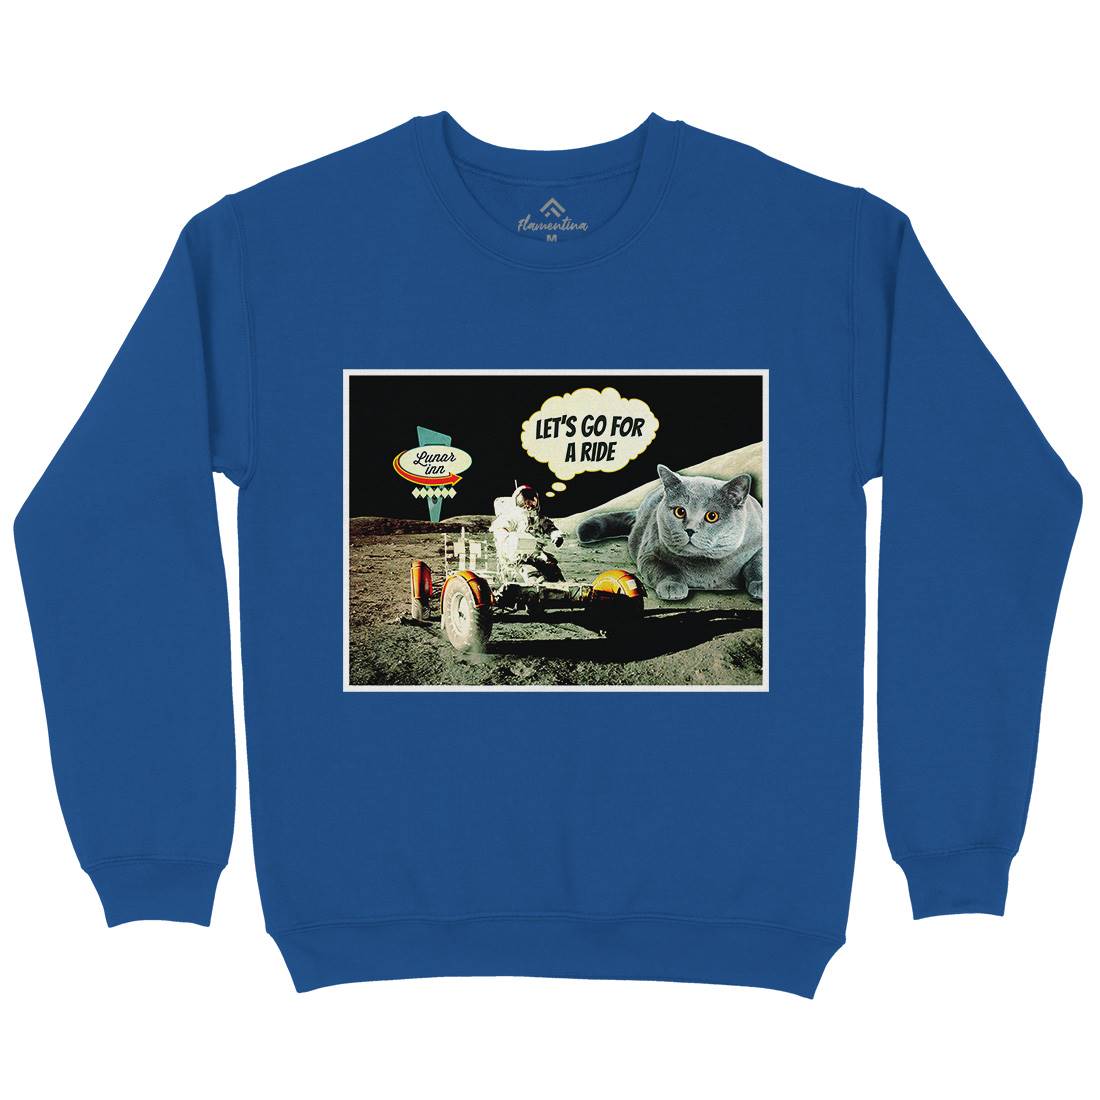 Moon Ride Kids Crew Neck Sweatshirt Space A882